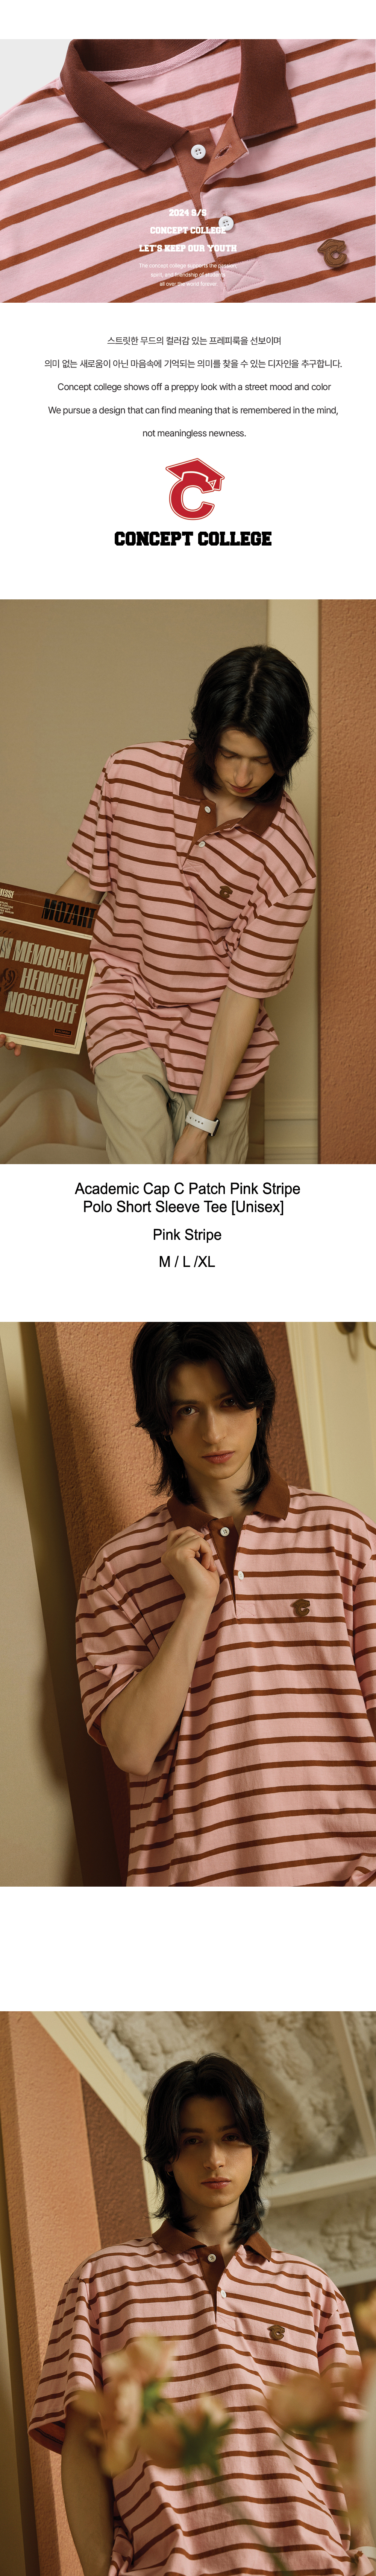 pink-stripe-polo-tee-1.jpg